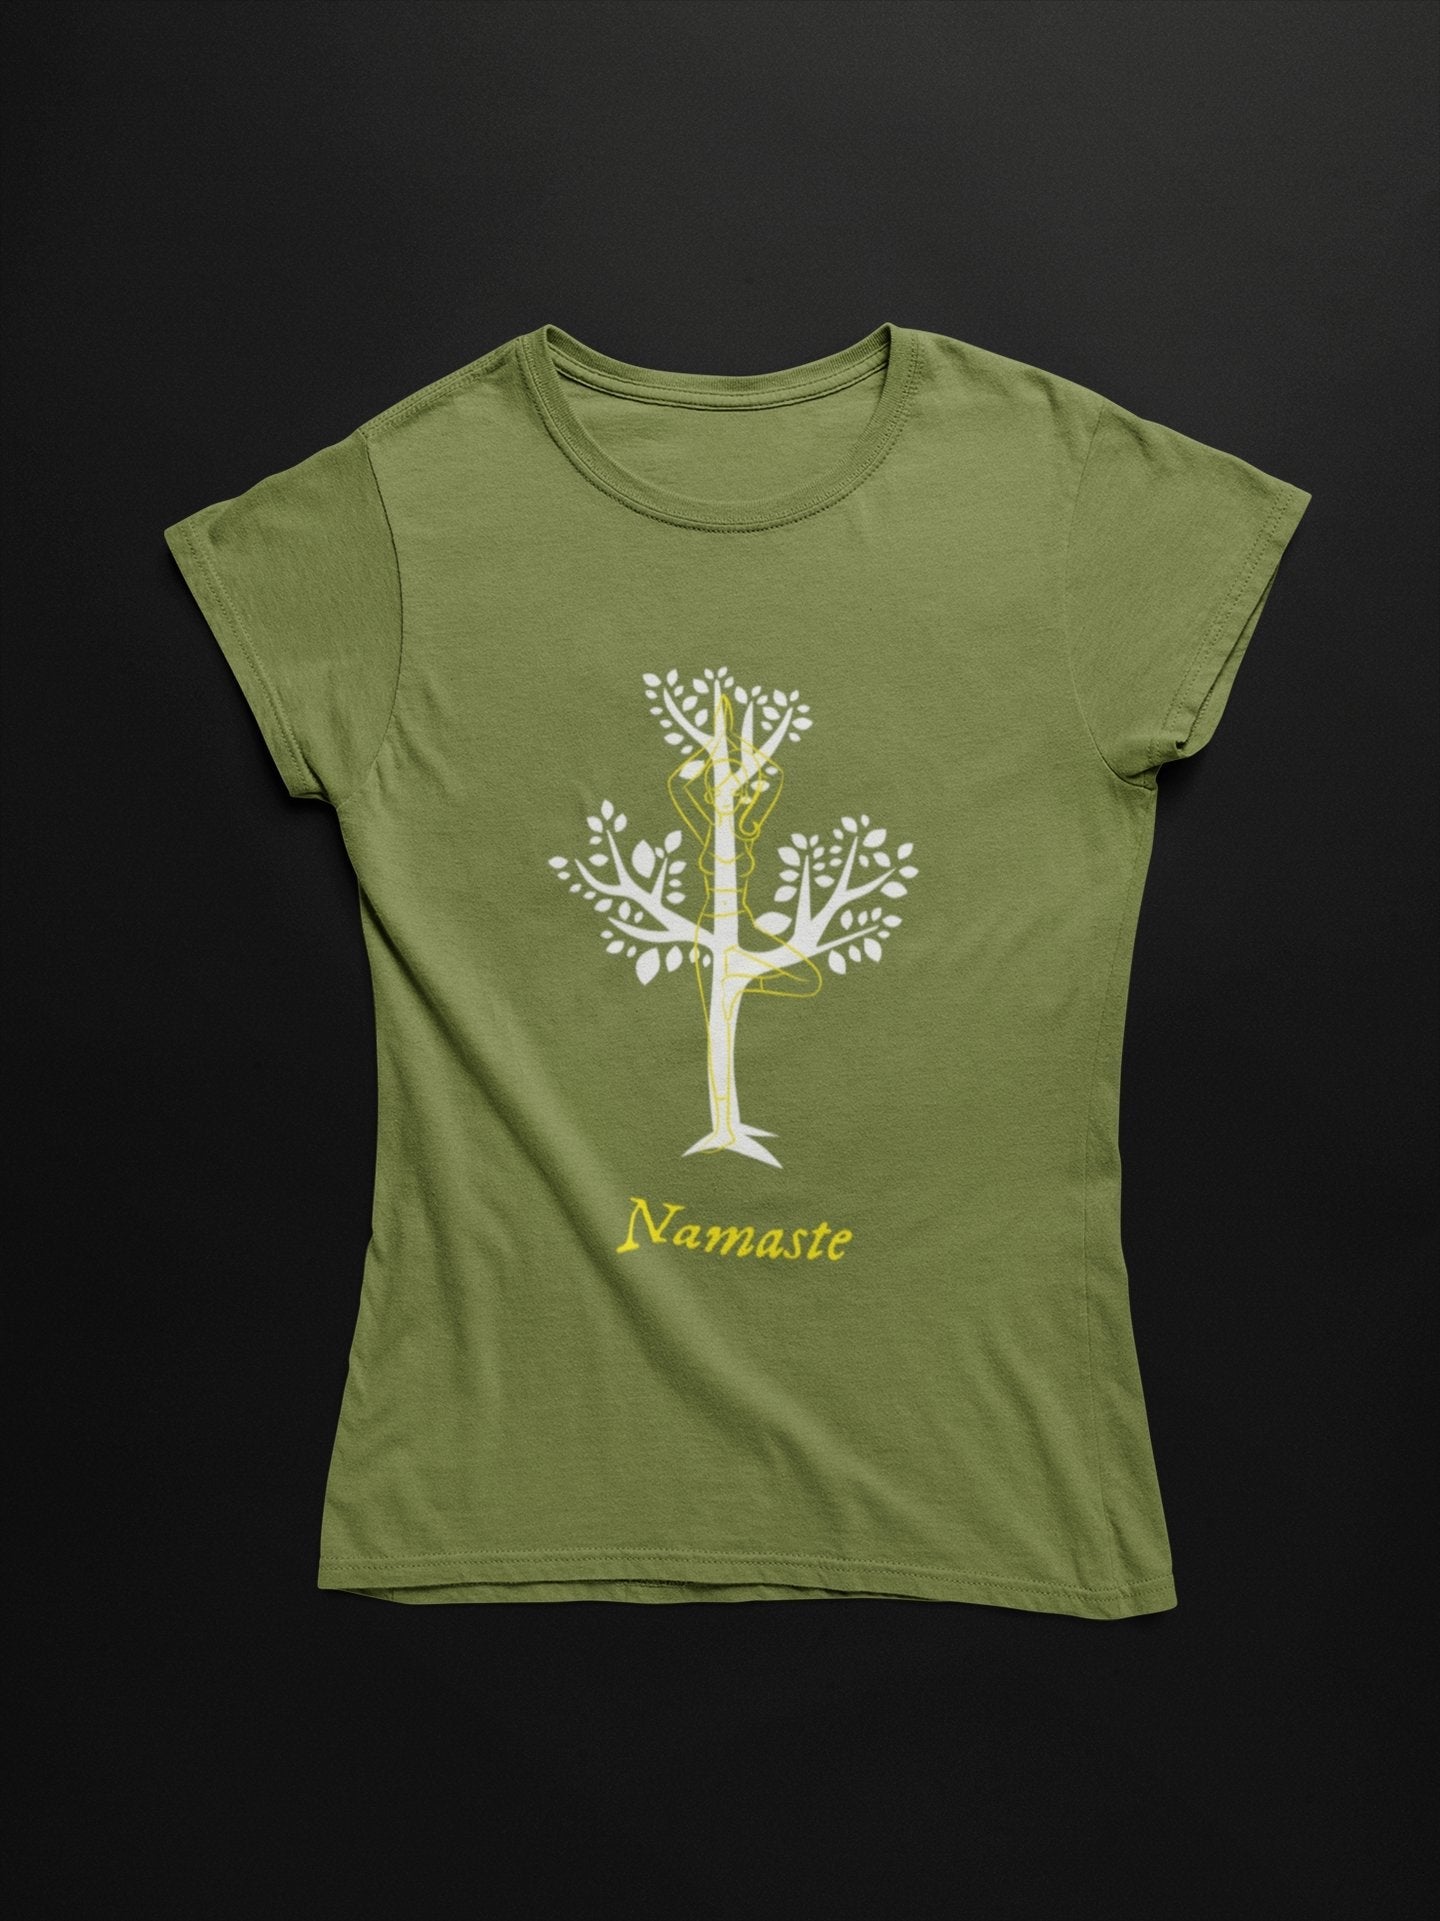 thelegalgang,Namaste Yog Tree Design Yoga T shirt for Women,WOMEN.